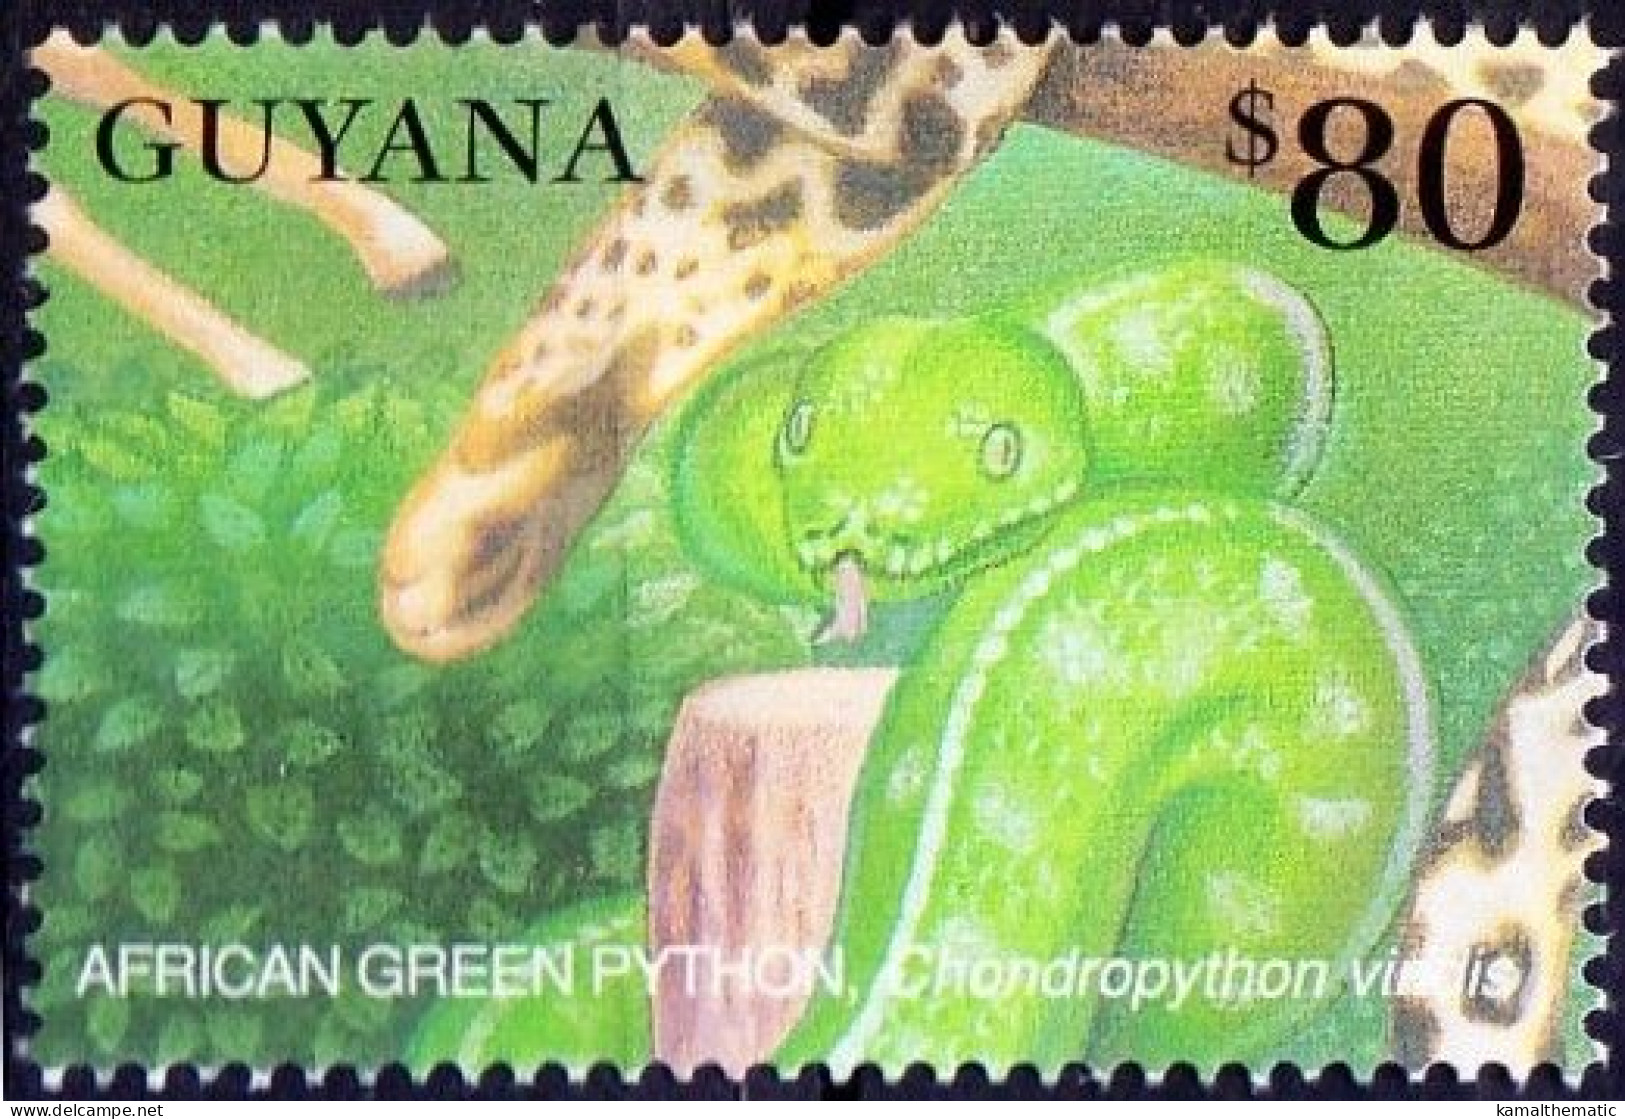 African Green Python, Reptiles, Snakes, Guyana 2001 MNH - Serpents